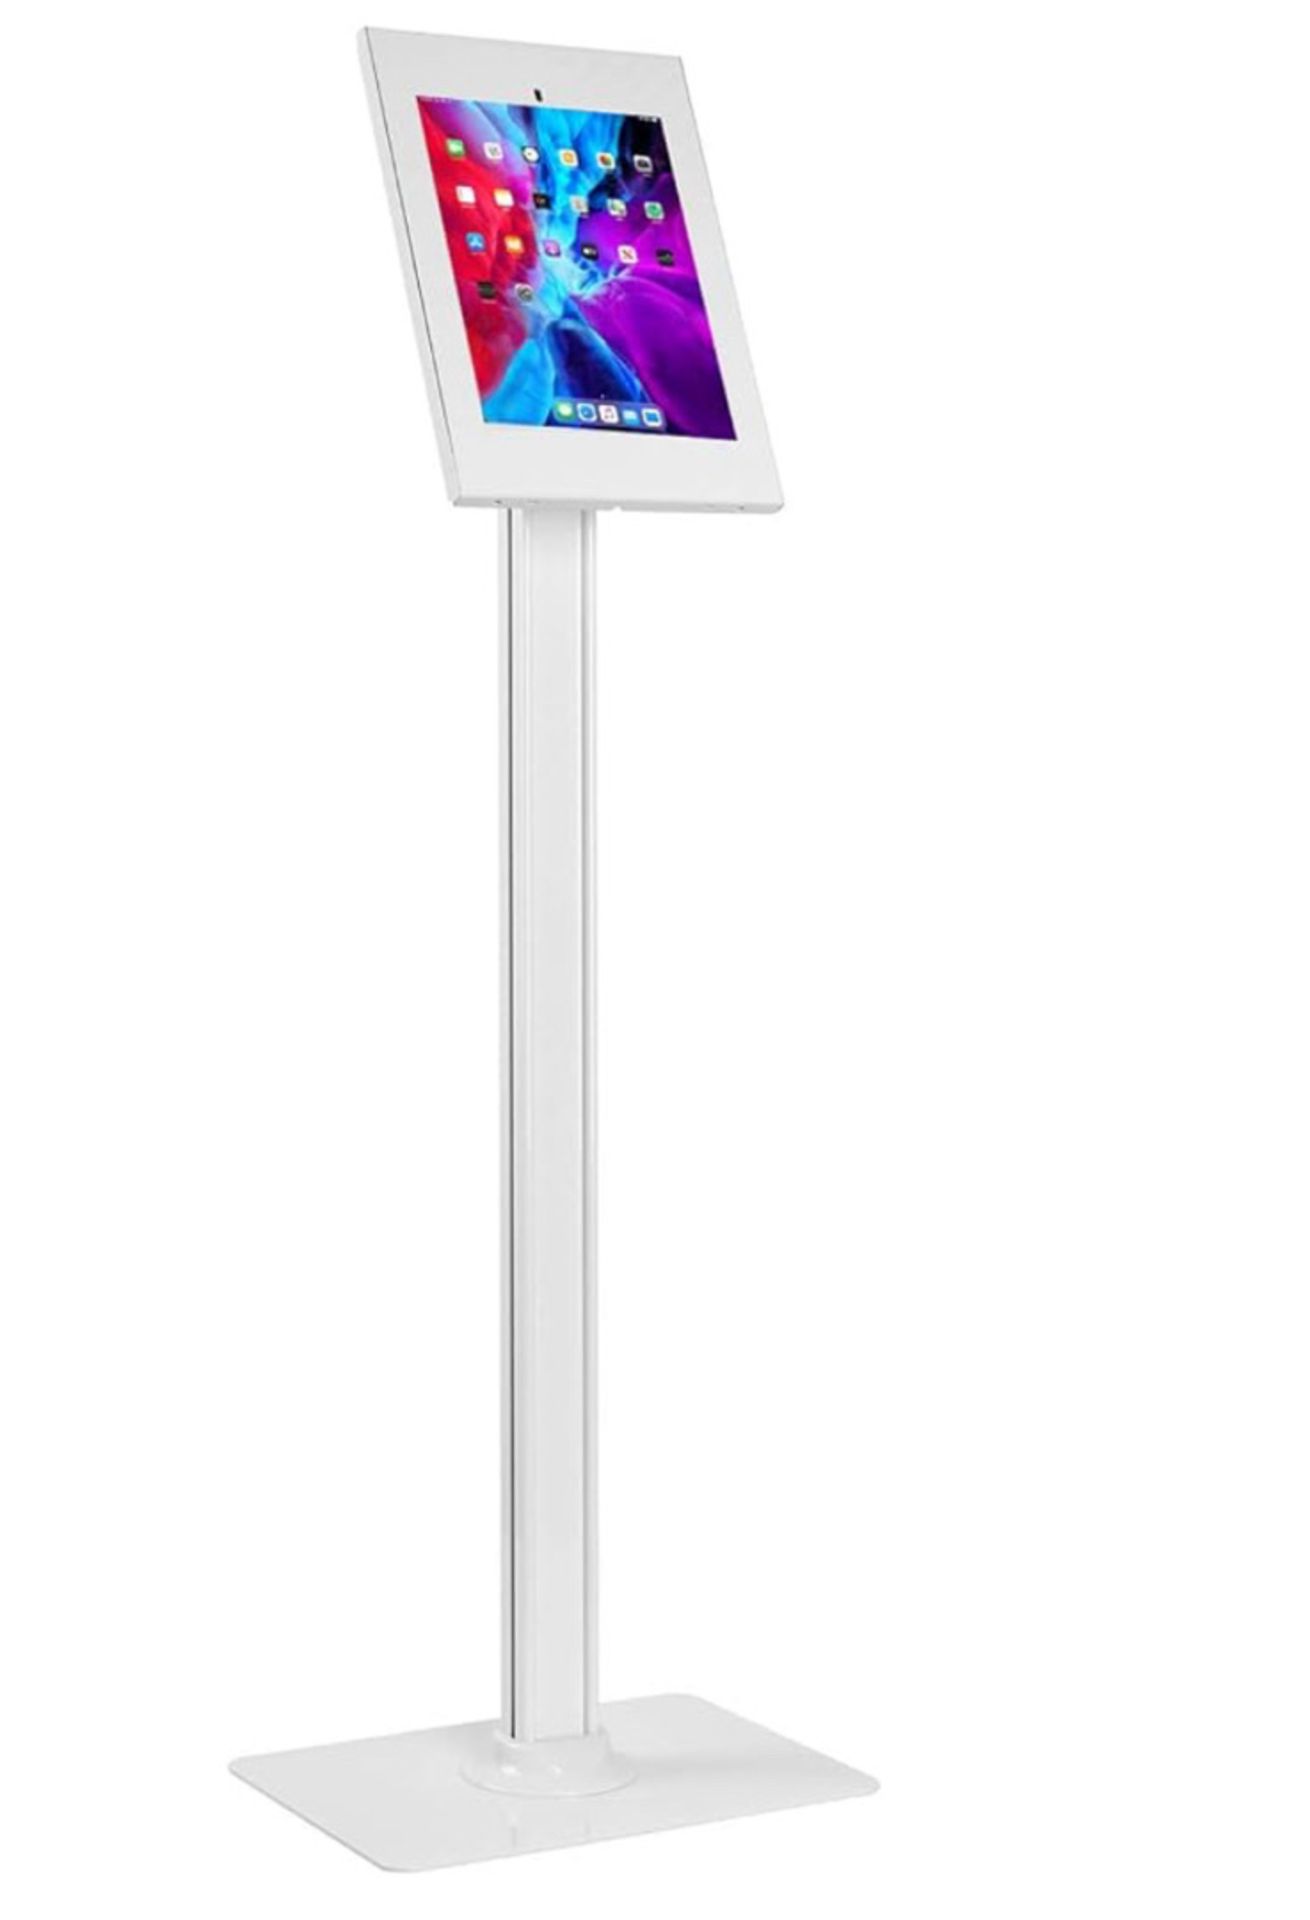 Allcam IPP2604FL Anti-Theft Floor Stand w/ Base for iPad Pro - NEW - AMAZON PRICE Â£69.98!